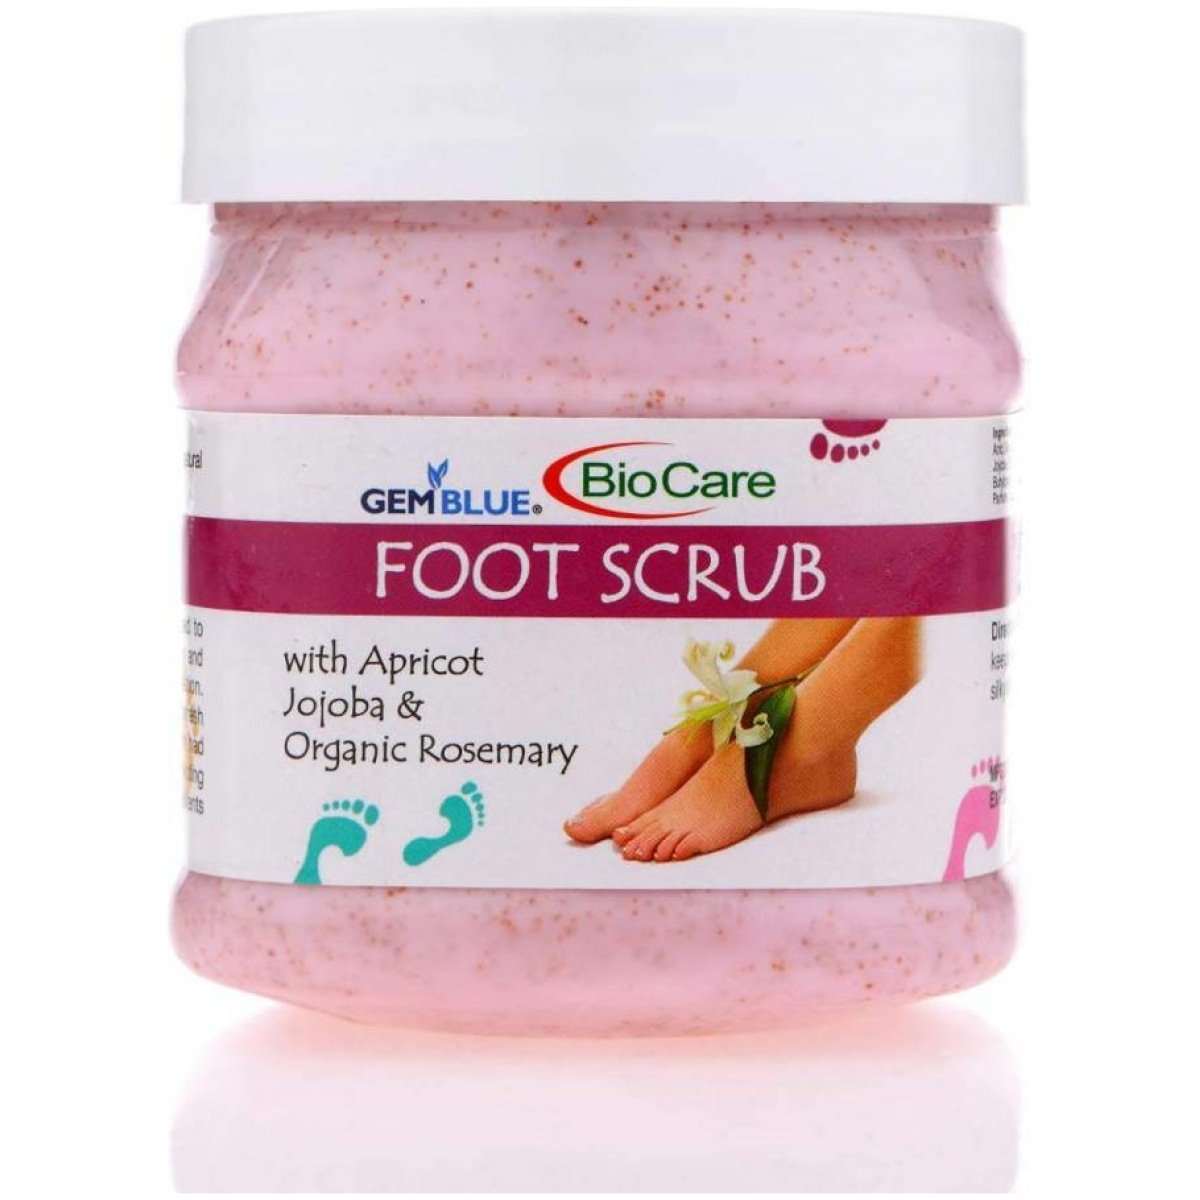 Gemblue Biocare Apricot Foot Scrub 500ml